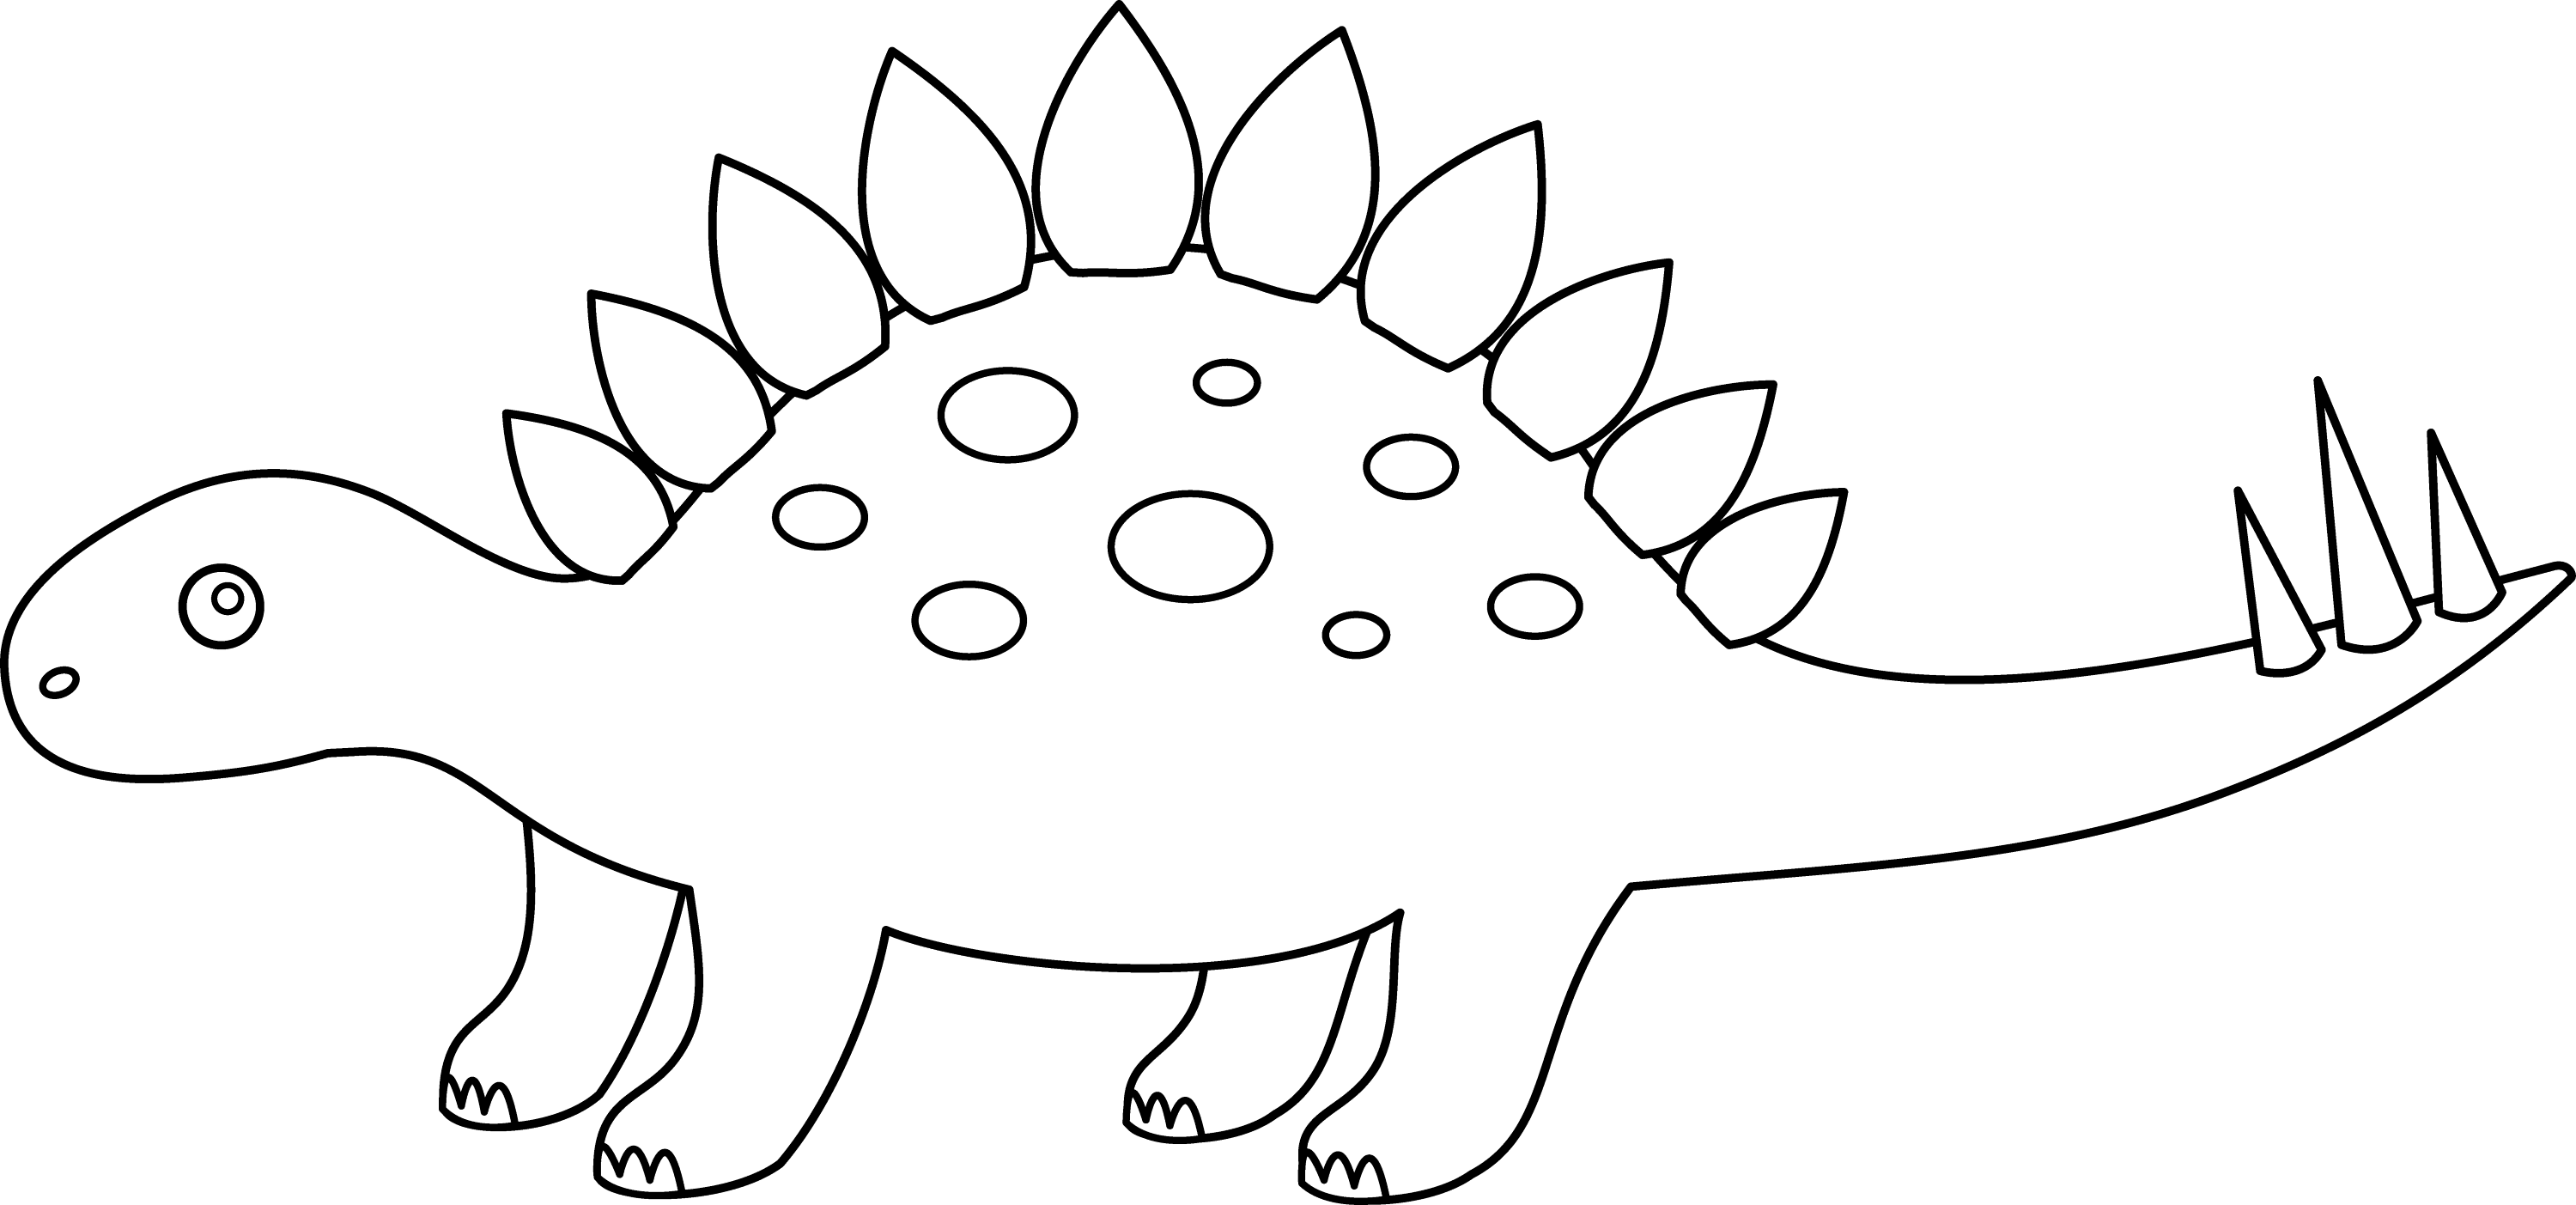 Stegosaurus Coloring Page - Free Clip Art